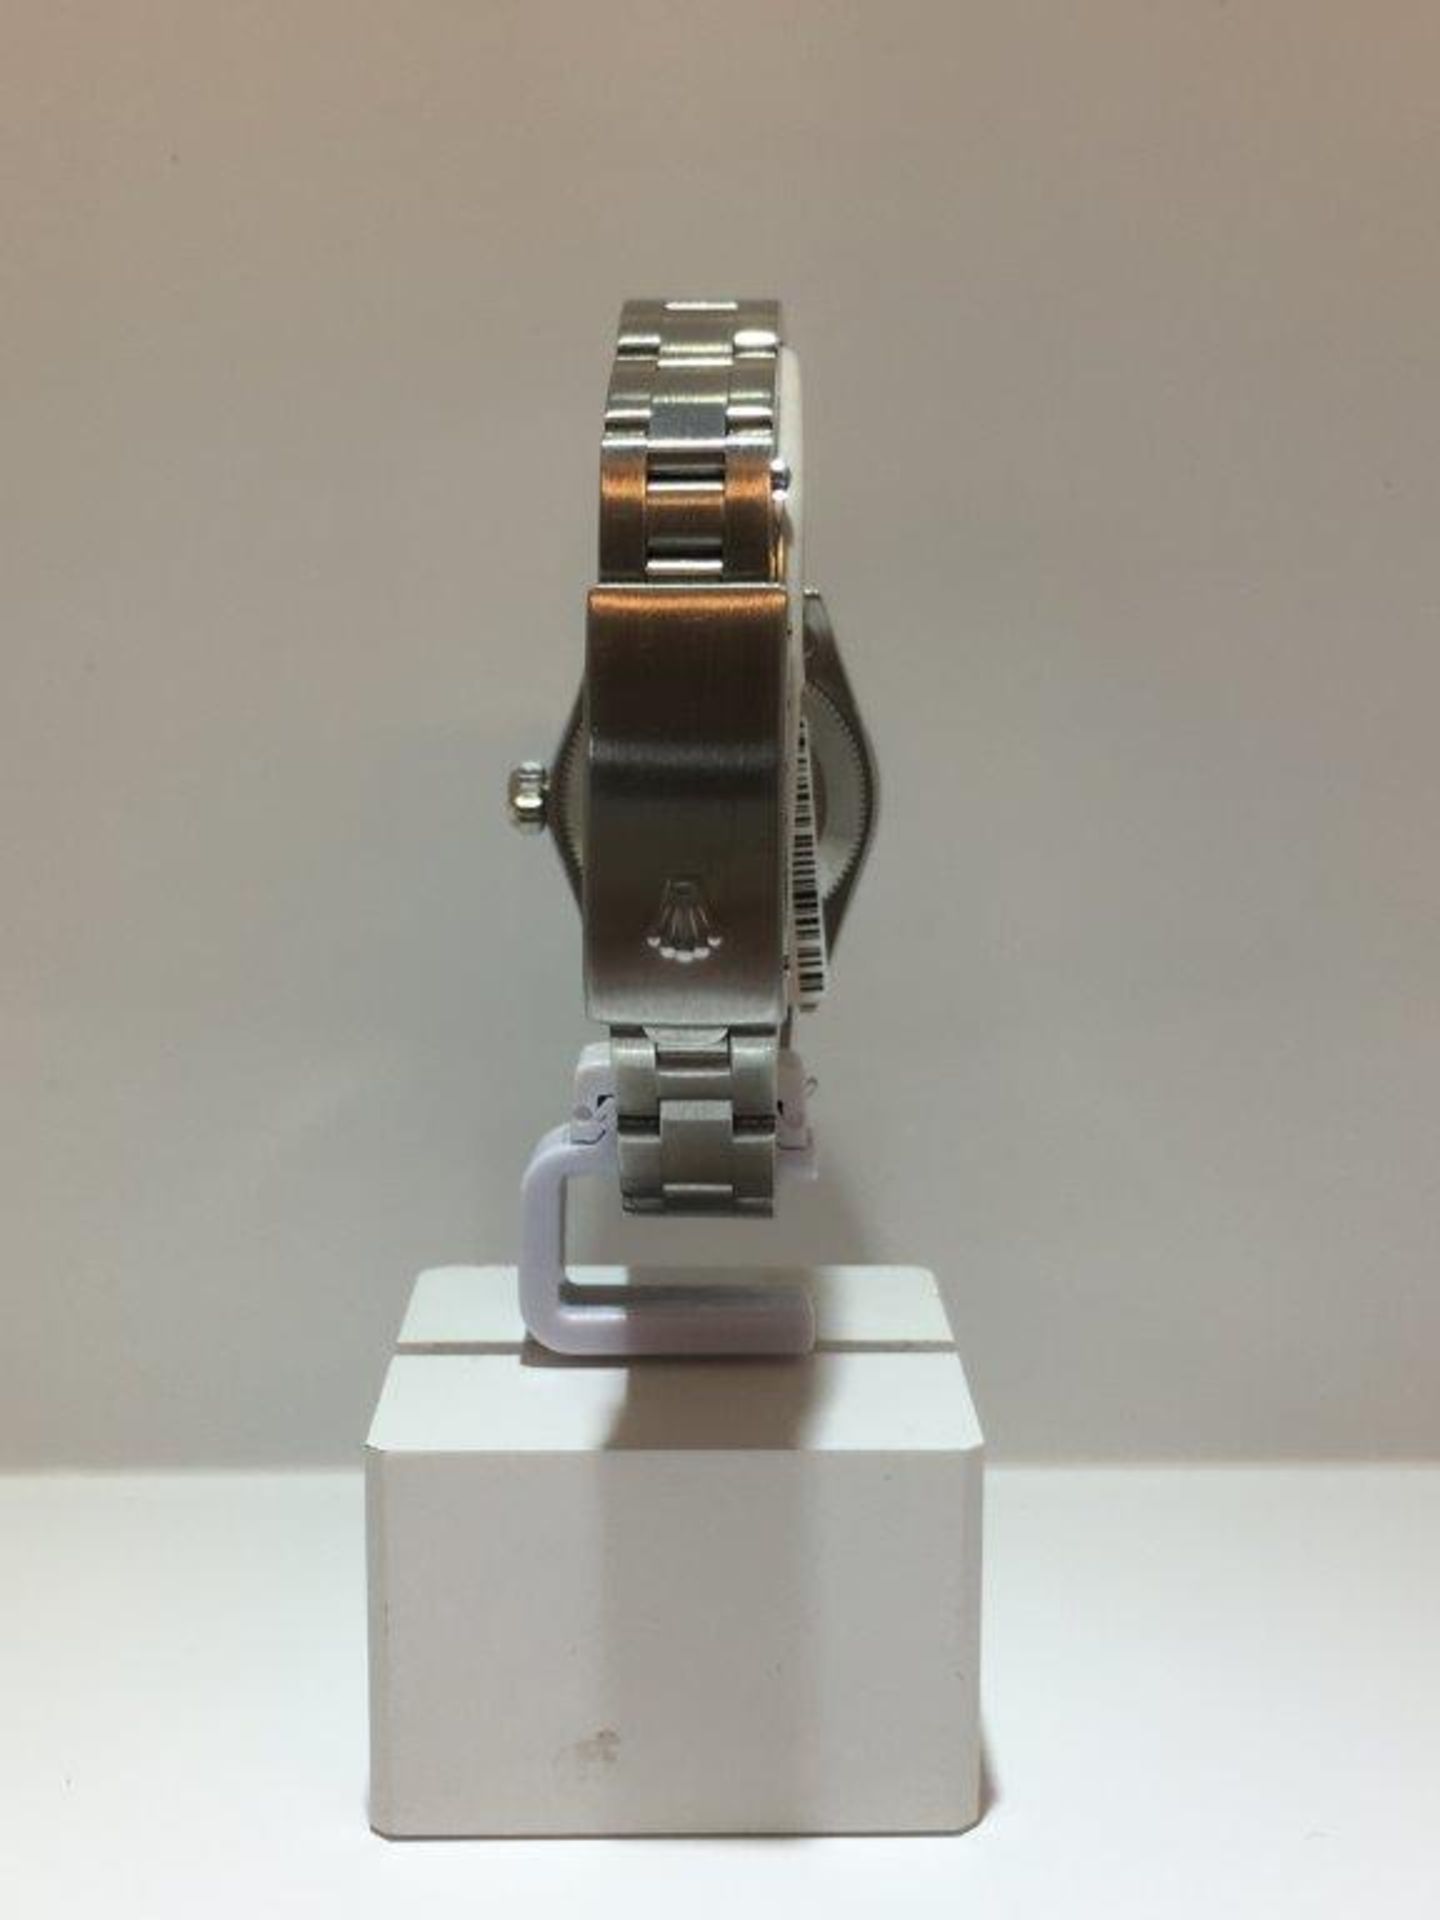 Ladies Rolex Stainless Steel Datejust Bracelet Watch - Image 3 of 4